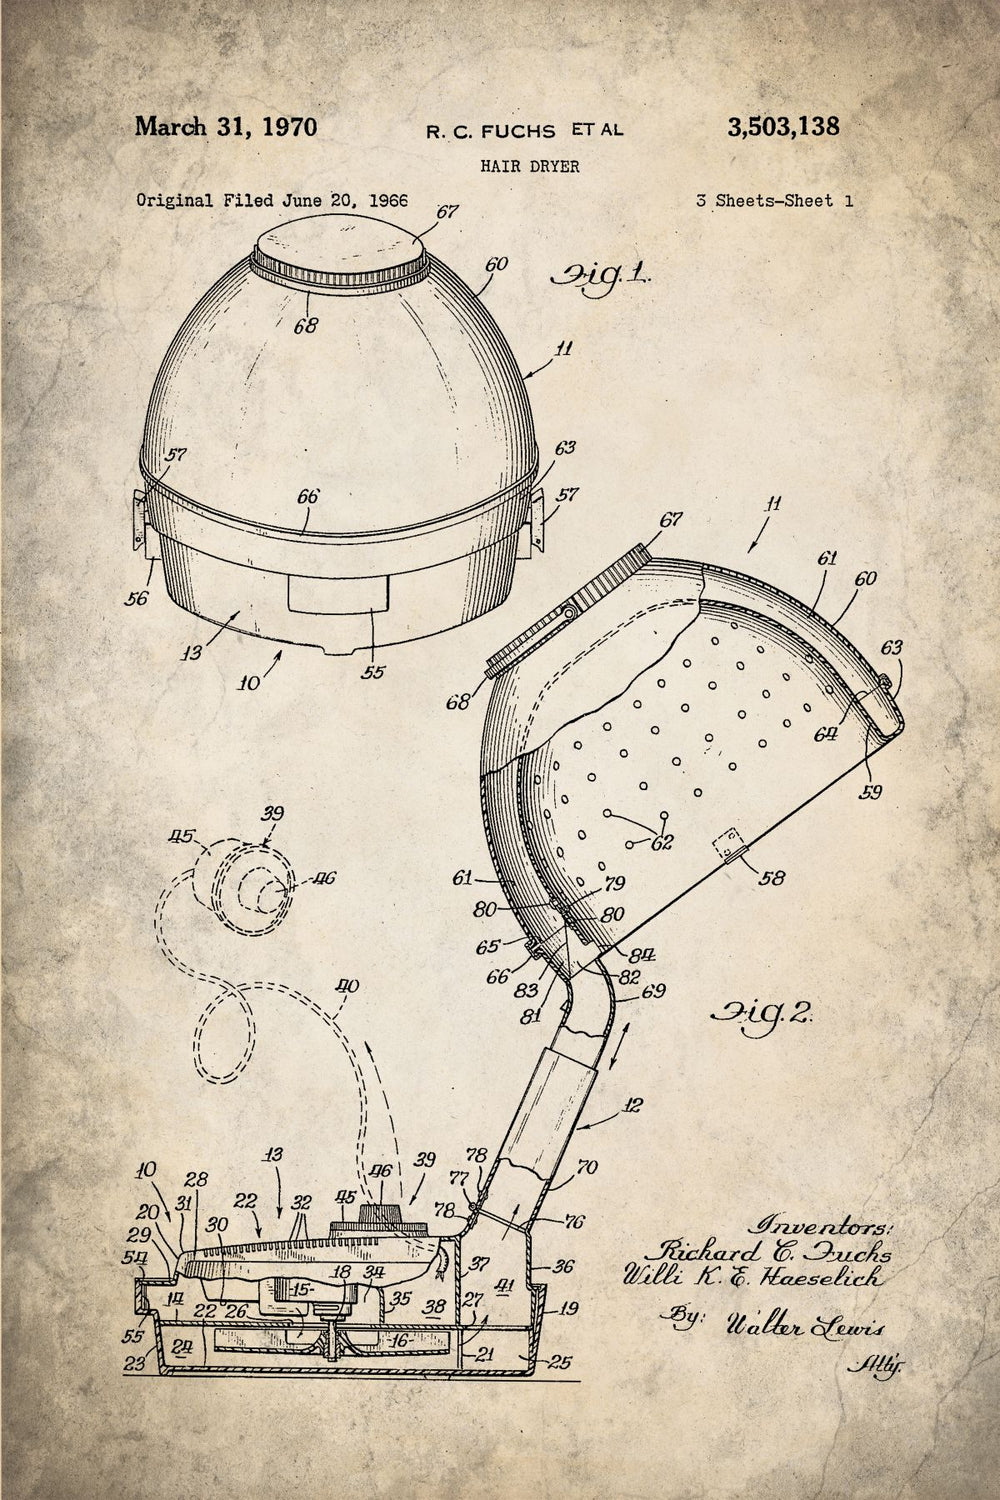 Hair Dryer 1970 Patent